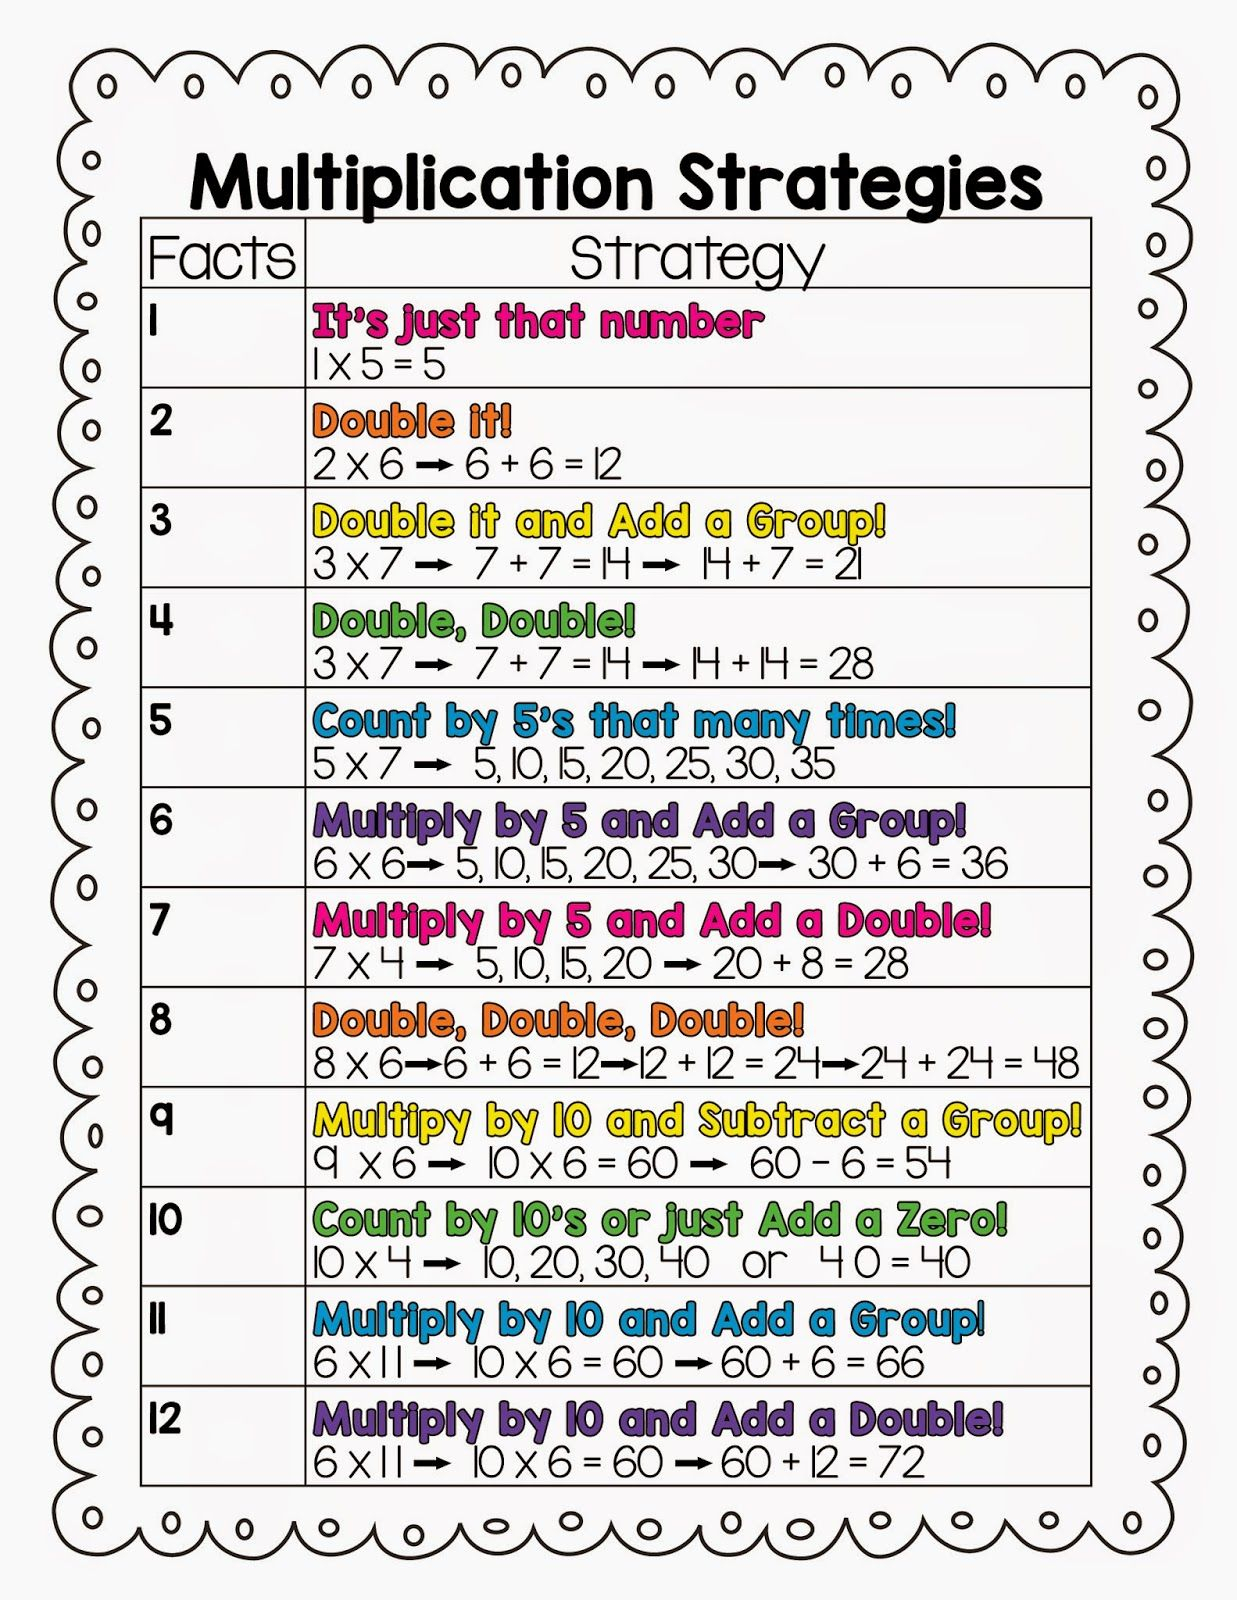 printable-multiplication-strategies-printable-multiplication-flash-cards